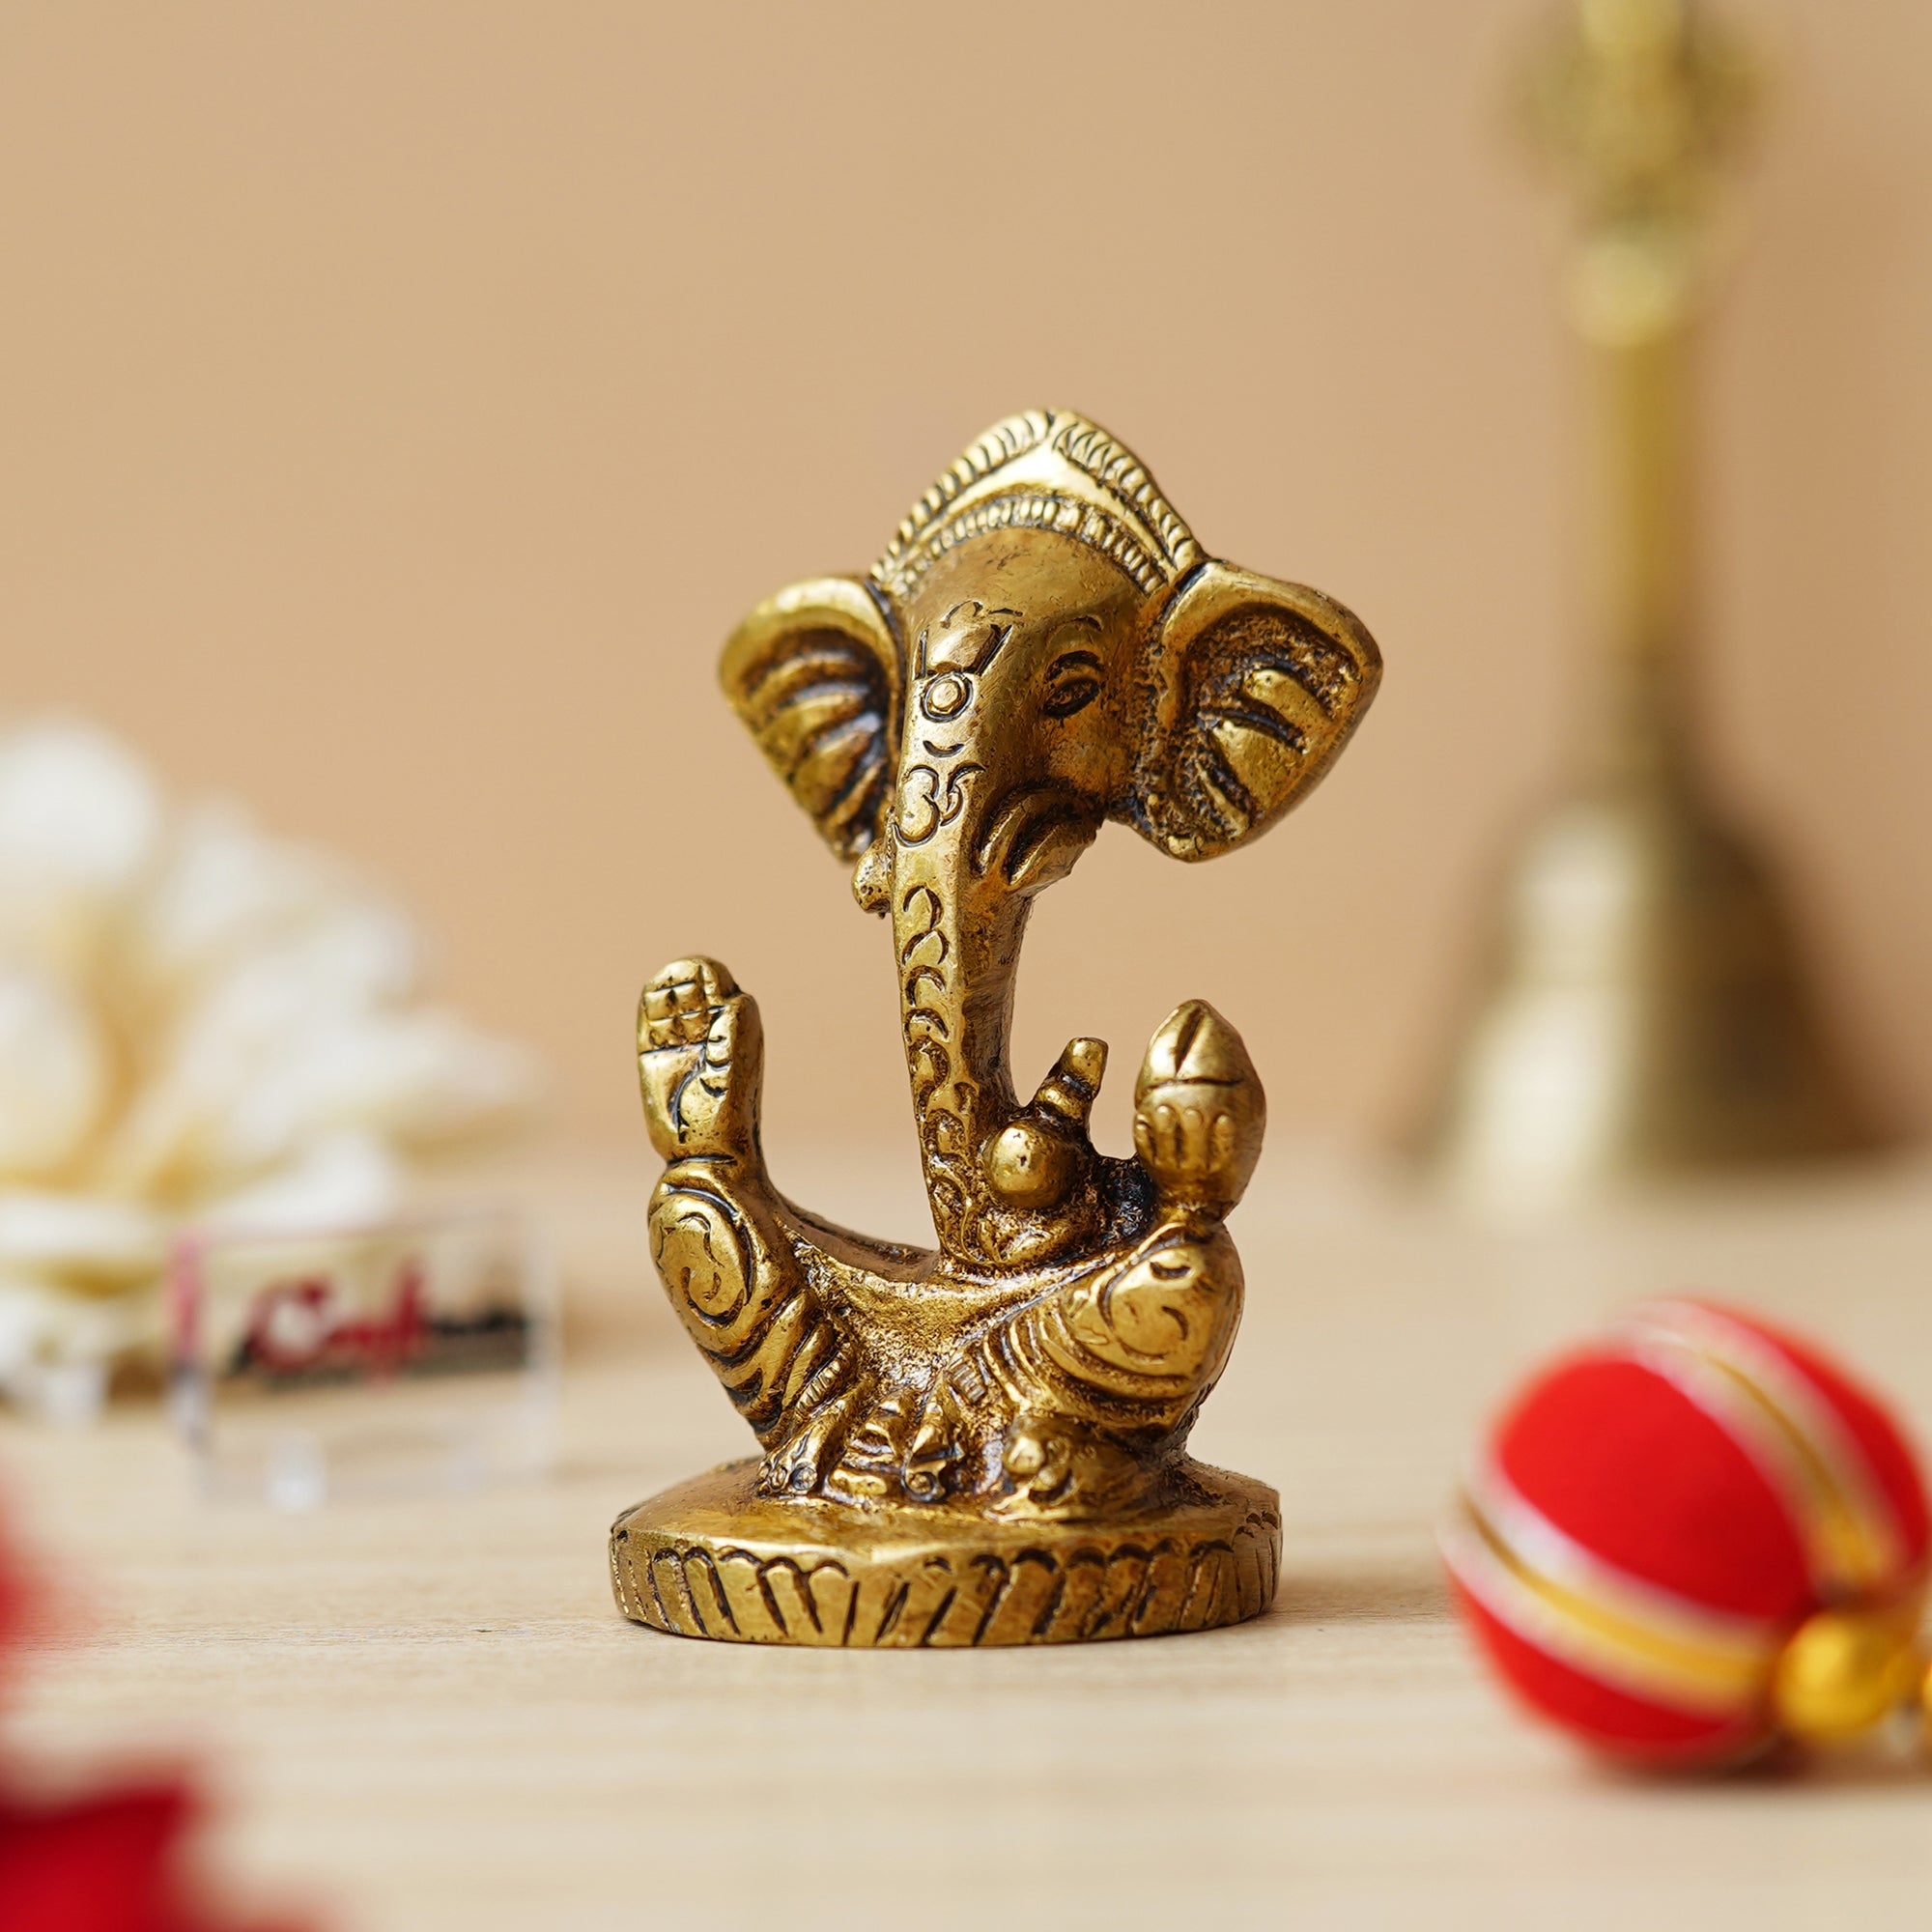 Golden Brass Blessing Lord Ganesha Idol Murti - God Statue for Car Dashboard, Home Decor, Office Desk, Temple Mandir 5